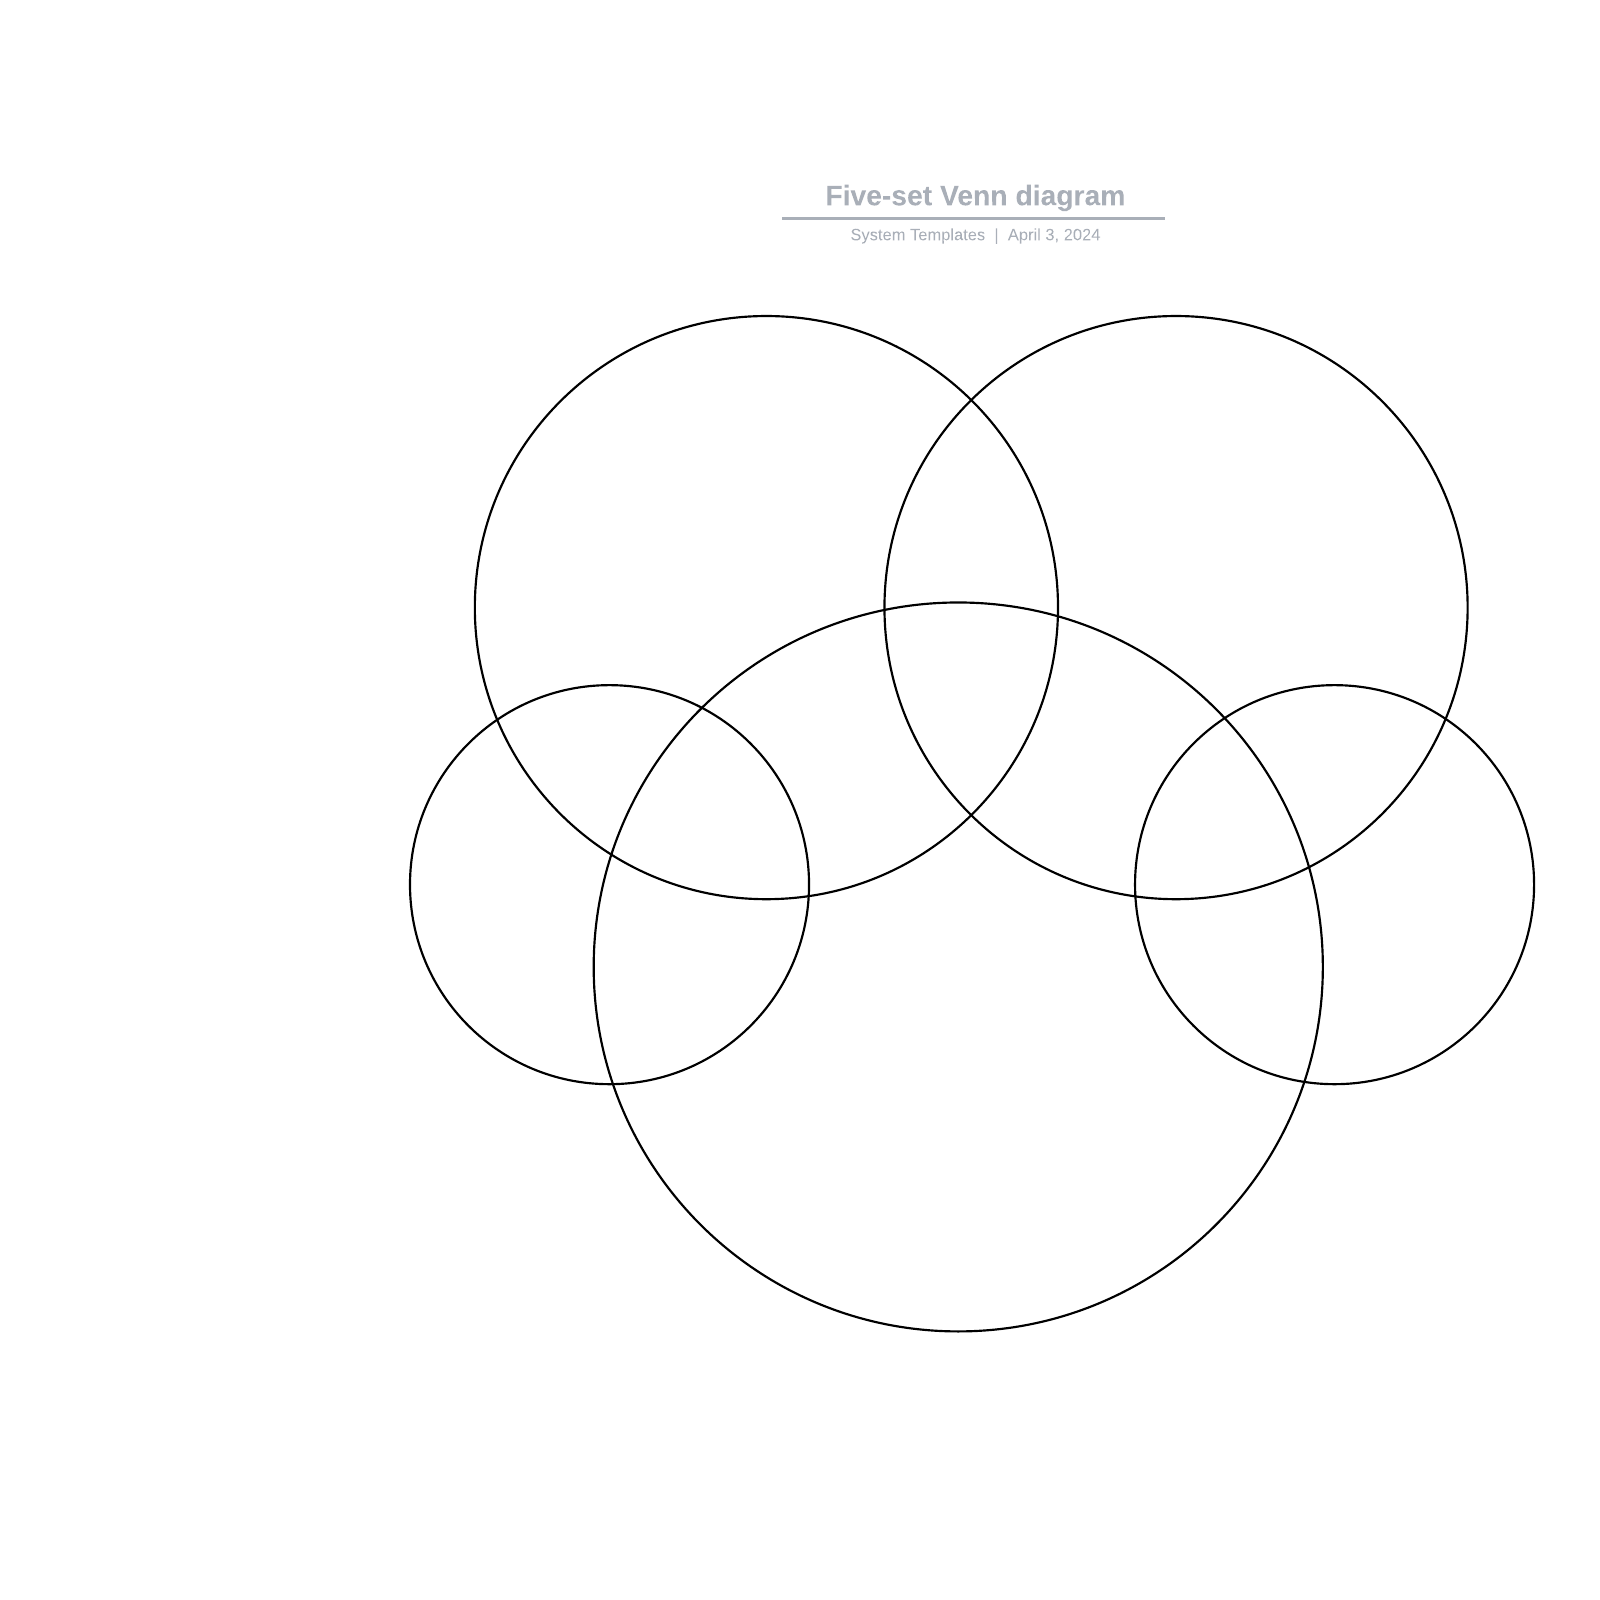 Five-set Venn diagram example